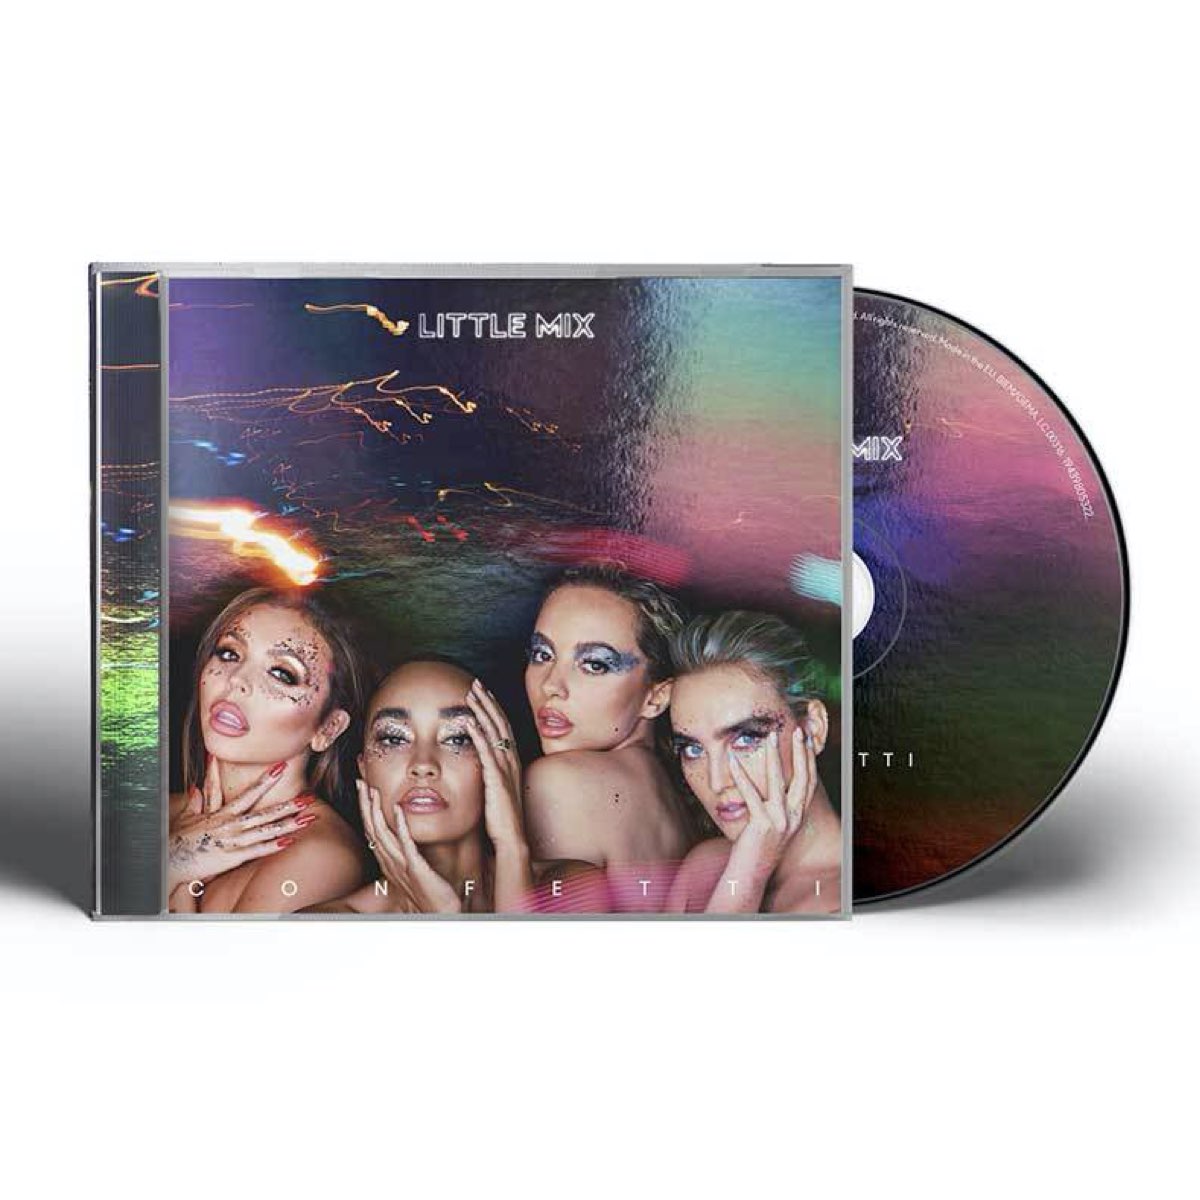 Little Mix - Confetti [Standard CD]